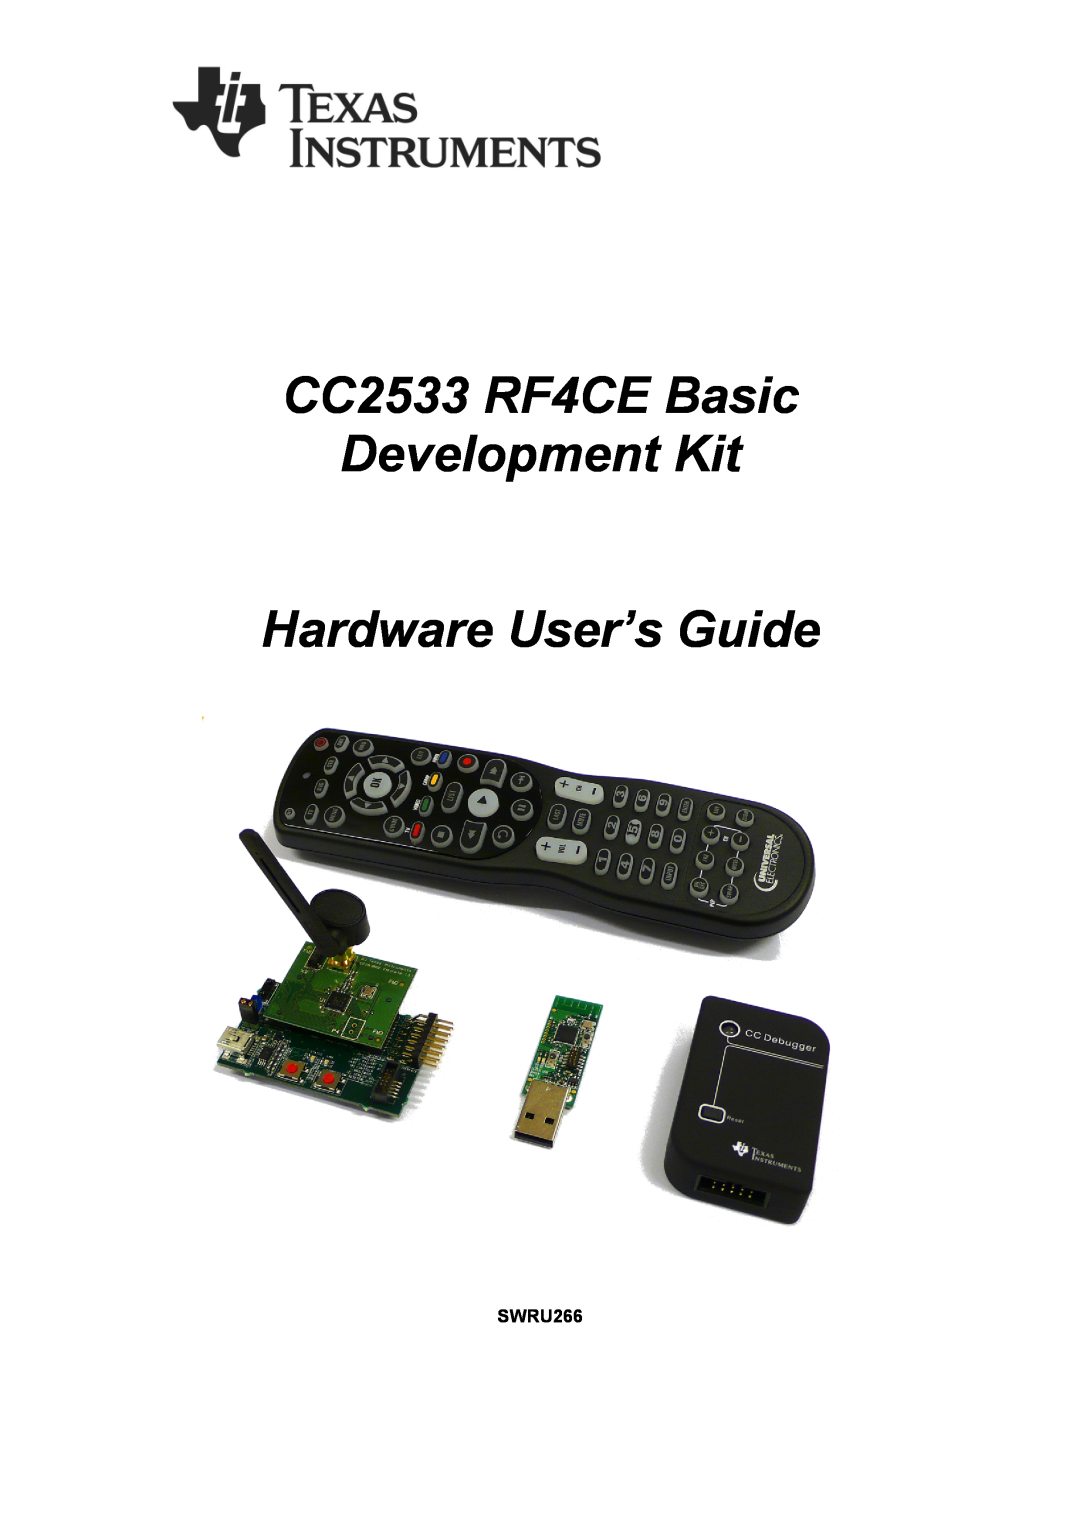 Texas Instruments manual SWRU266, CC2533 RF4CE Basic Development Kit, Hardware User’s Guide 